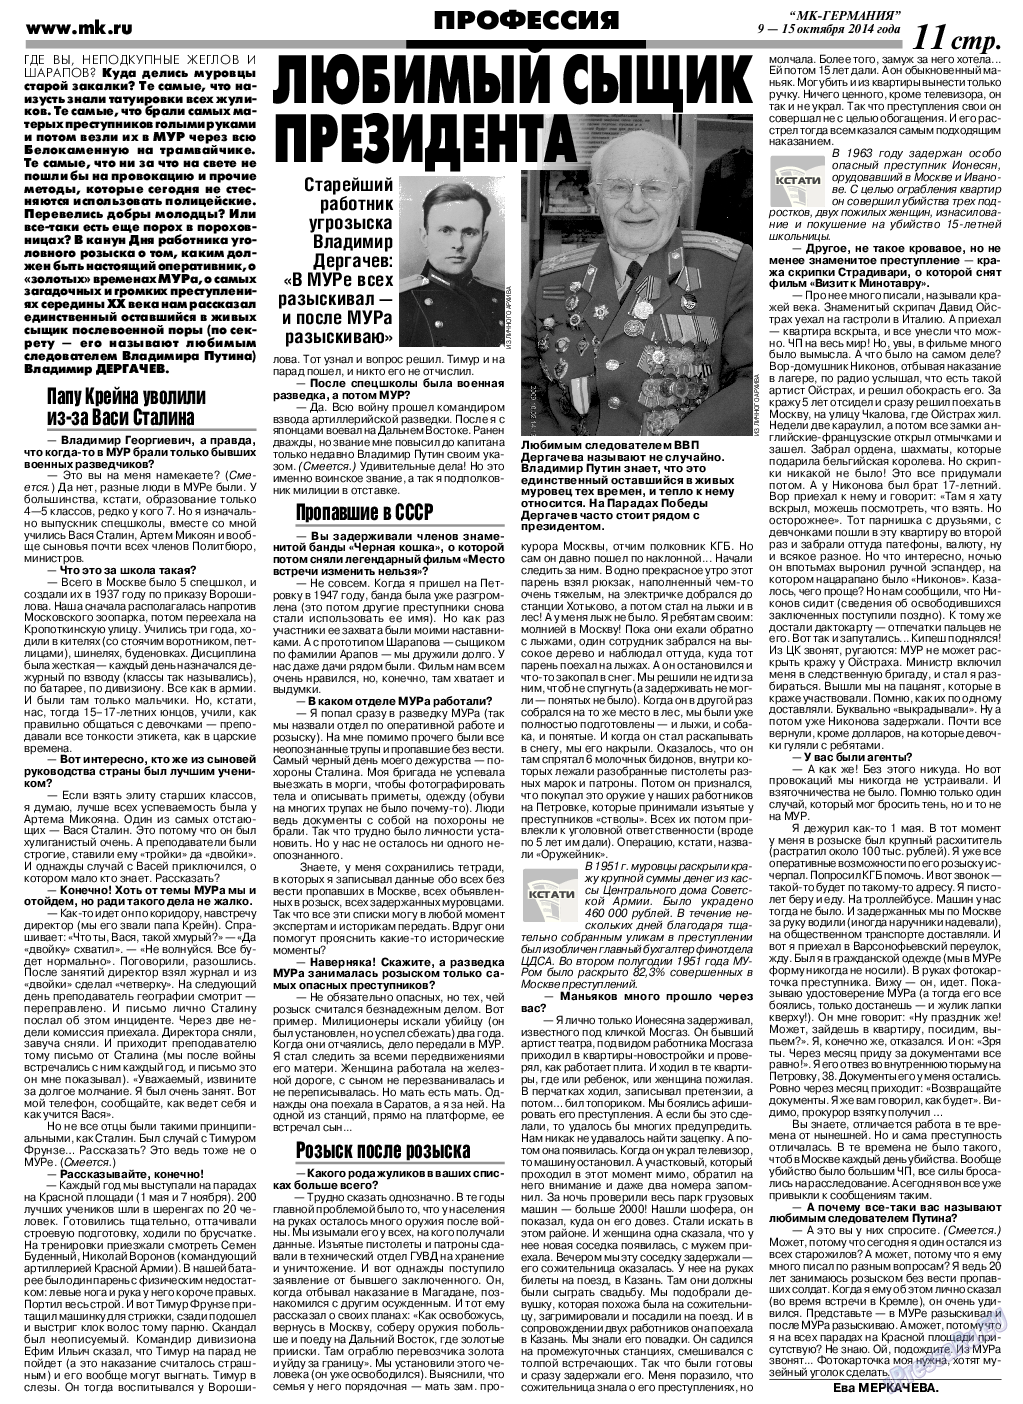 МК-Германия, газета. 2014 №41 стр.11